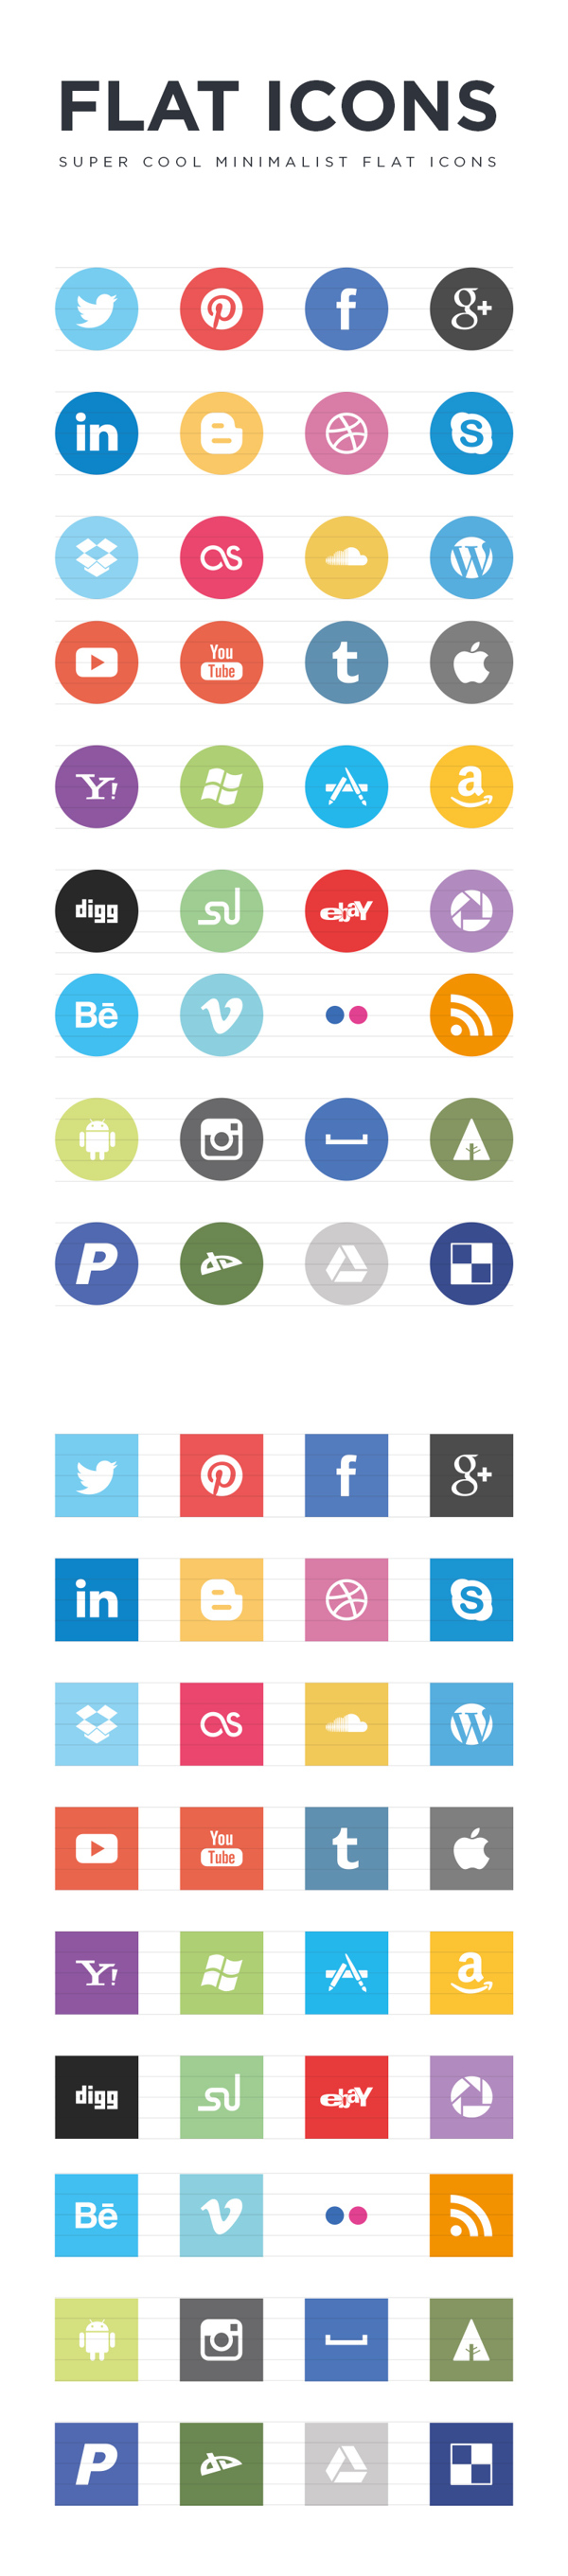 Cool minimalist Flat social icons